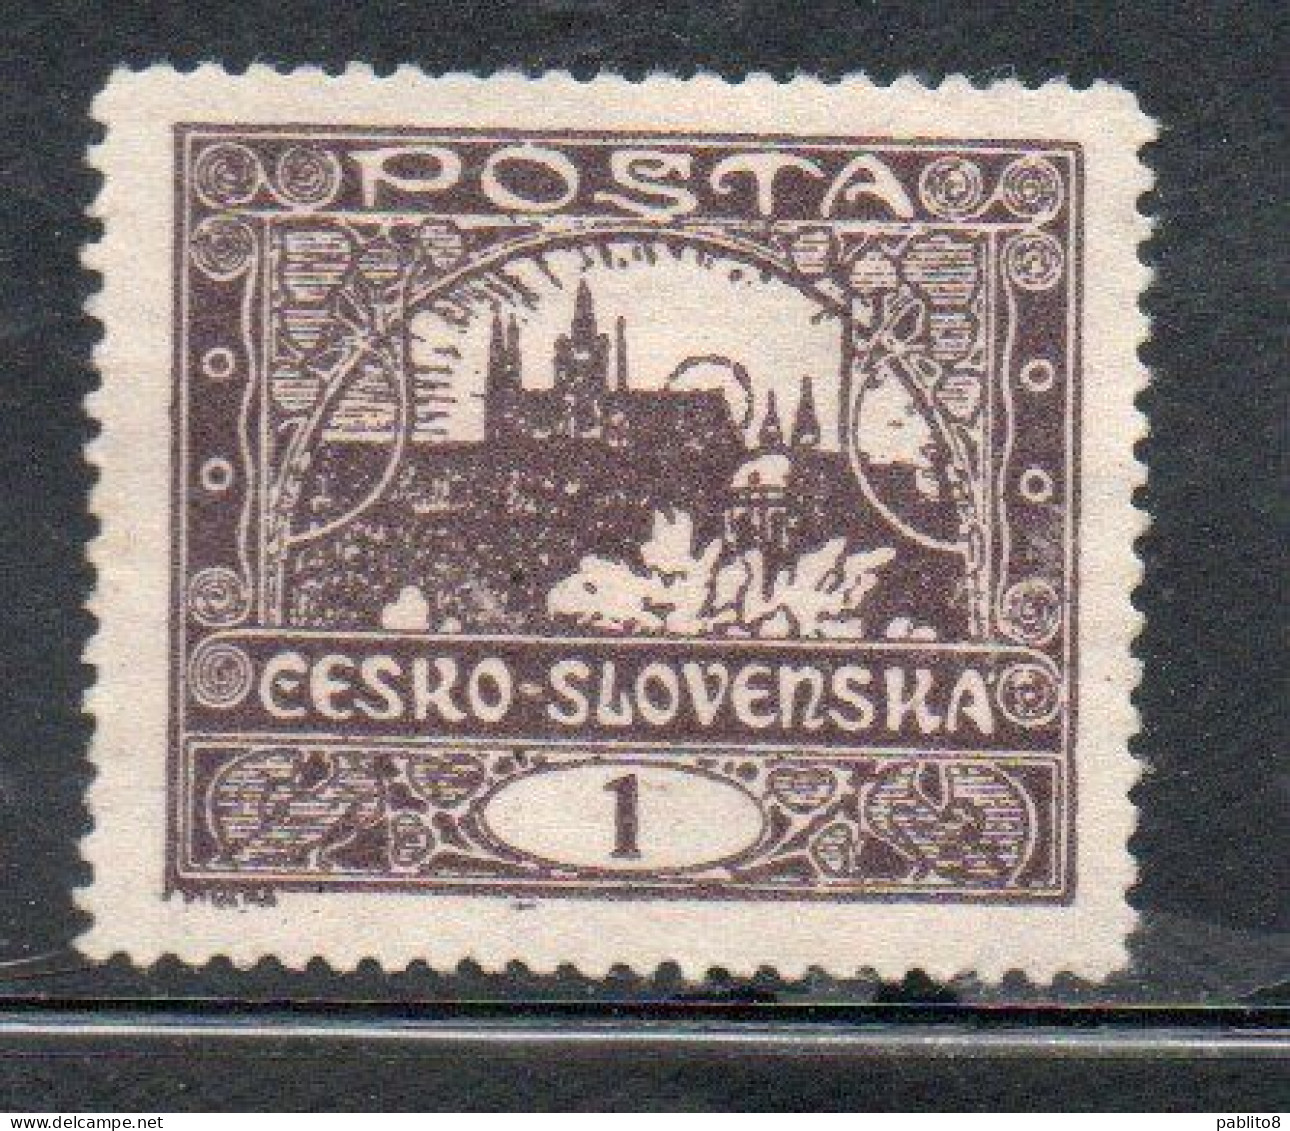 CZECH REPUBLIC REPUBBLICA CECA CZECHOSLOVAKIA CESKA CECOSLOVACCHIA 1919 1920 HRADCANY AT PRAGUE 1h MH - Unused Stamps